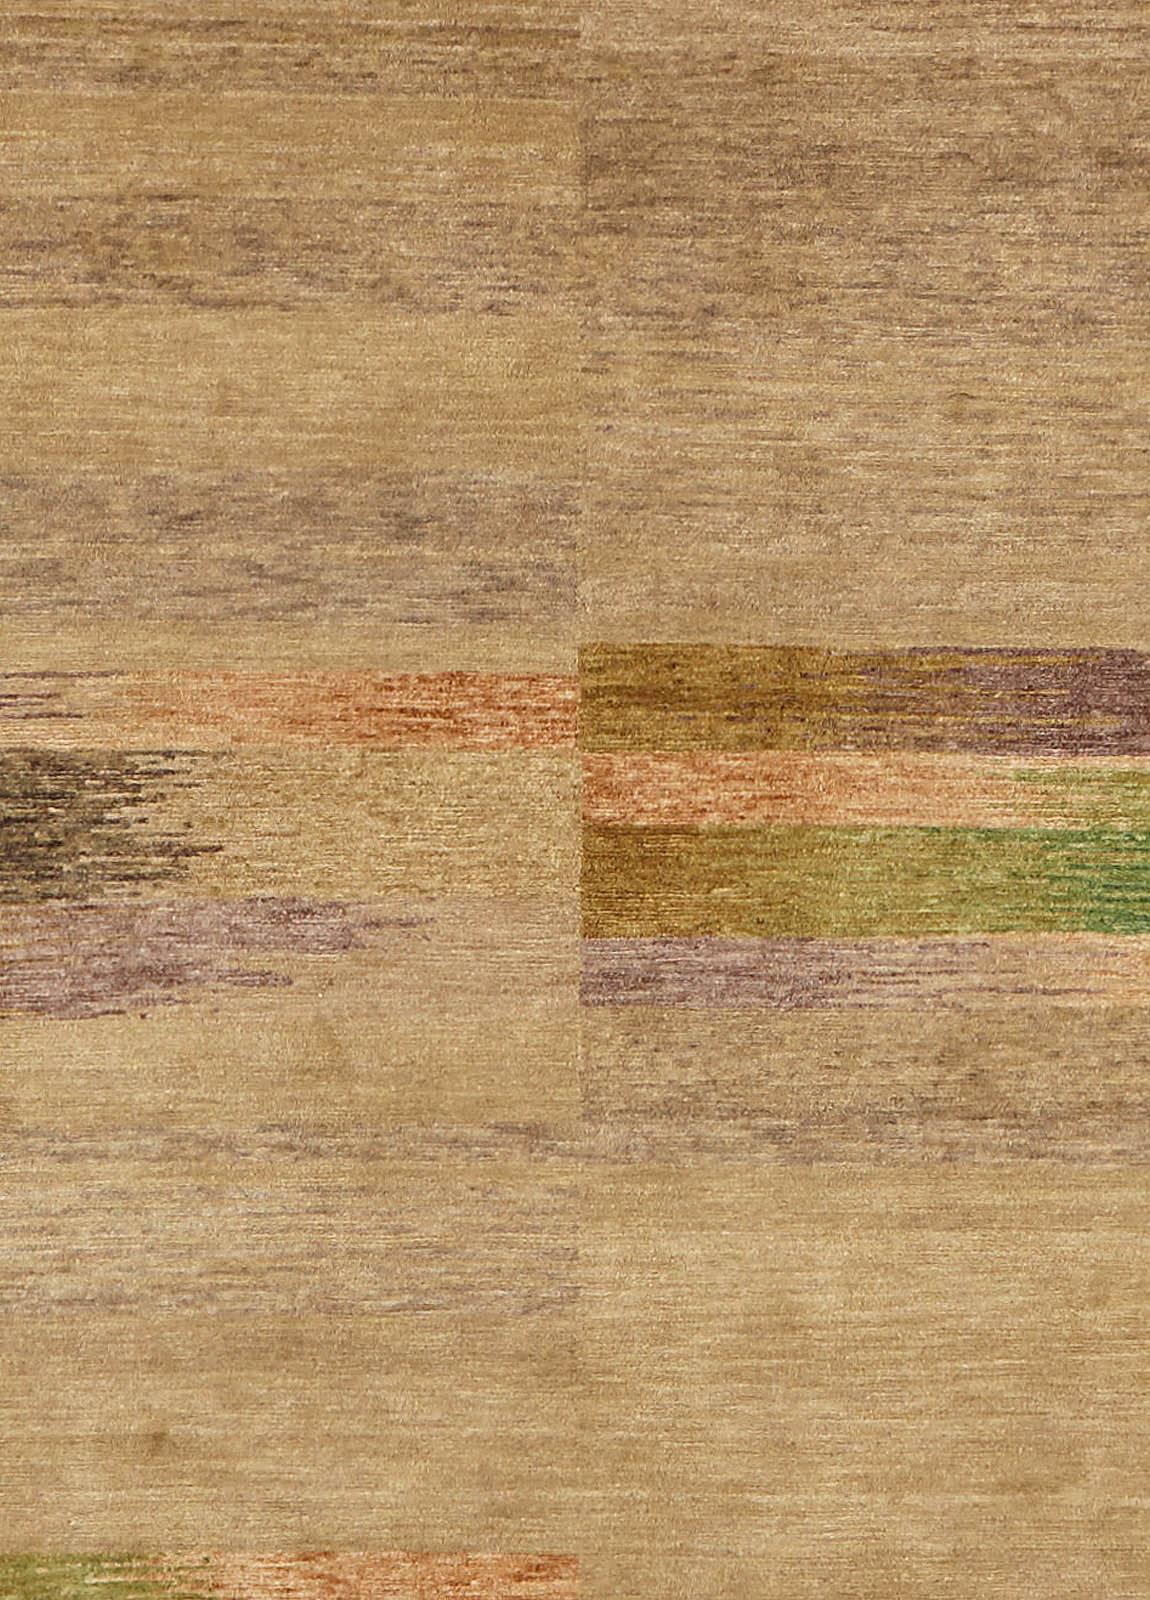 Contemporary Navajo-Sand geometric wool and silk rug by Doris Leslie Blau.
Size: 9.0